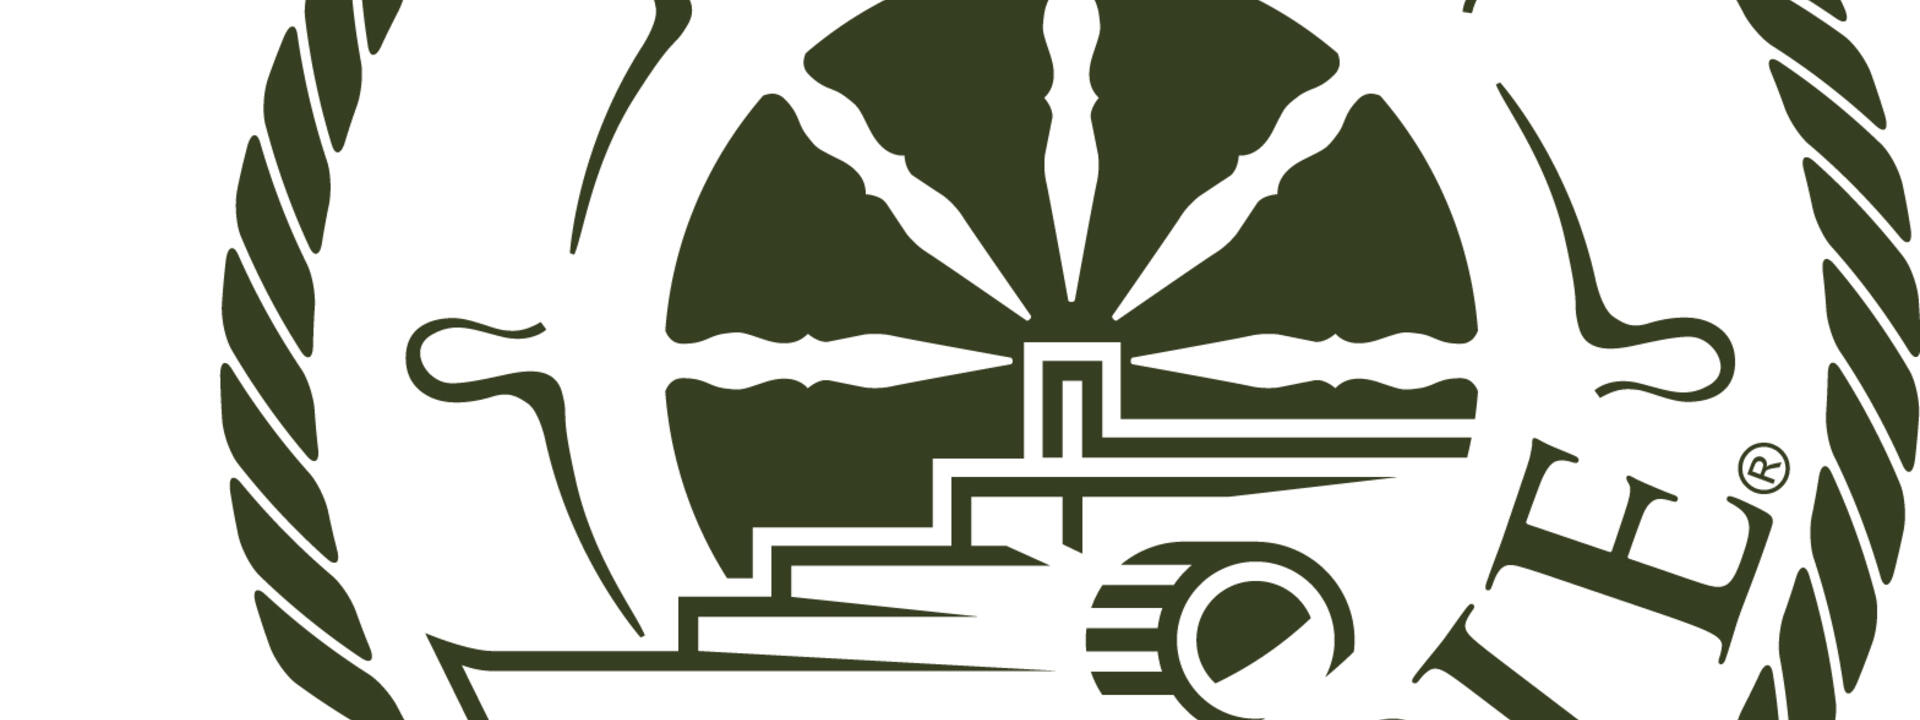 waimarie-logo-variation-turtle-green-high-res.jpg